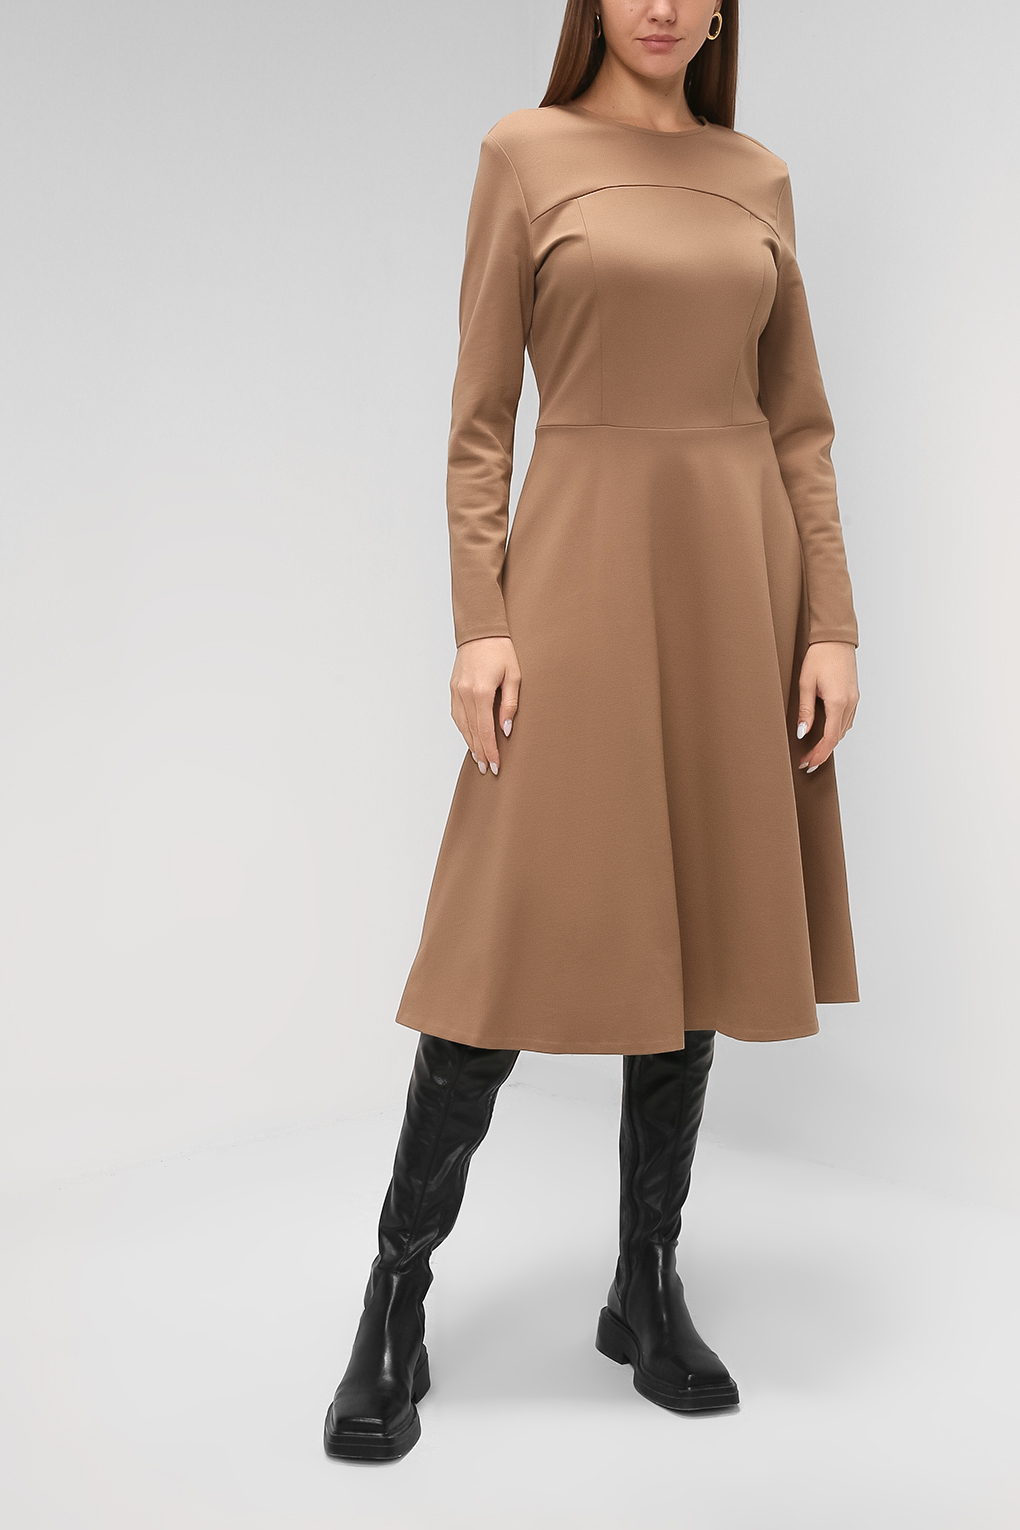 фото Платье женское paola ray pr120-9017 коричневое xs